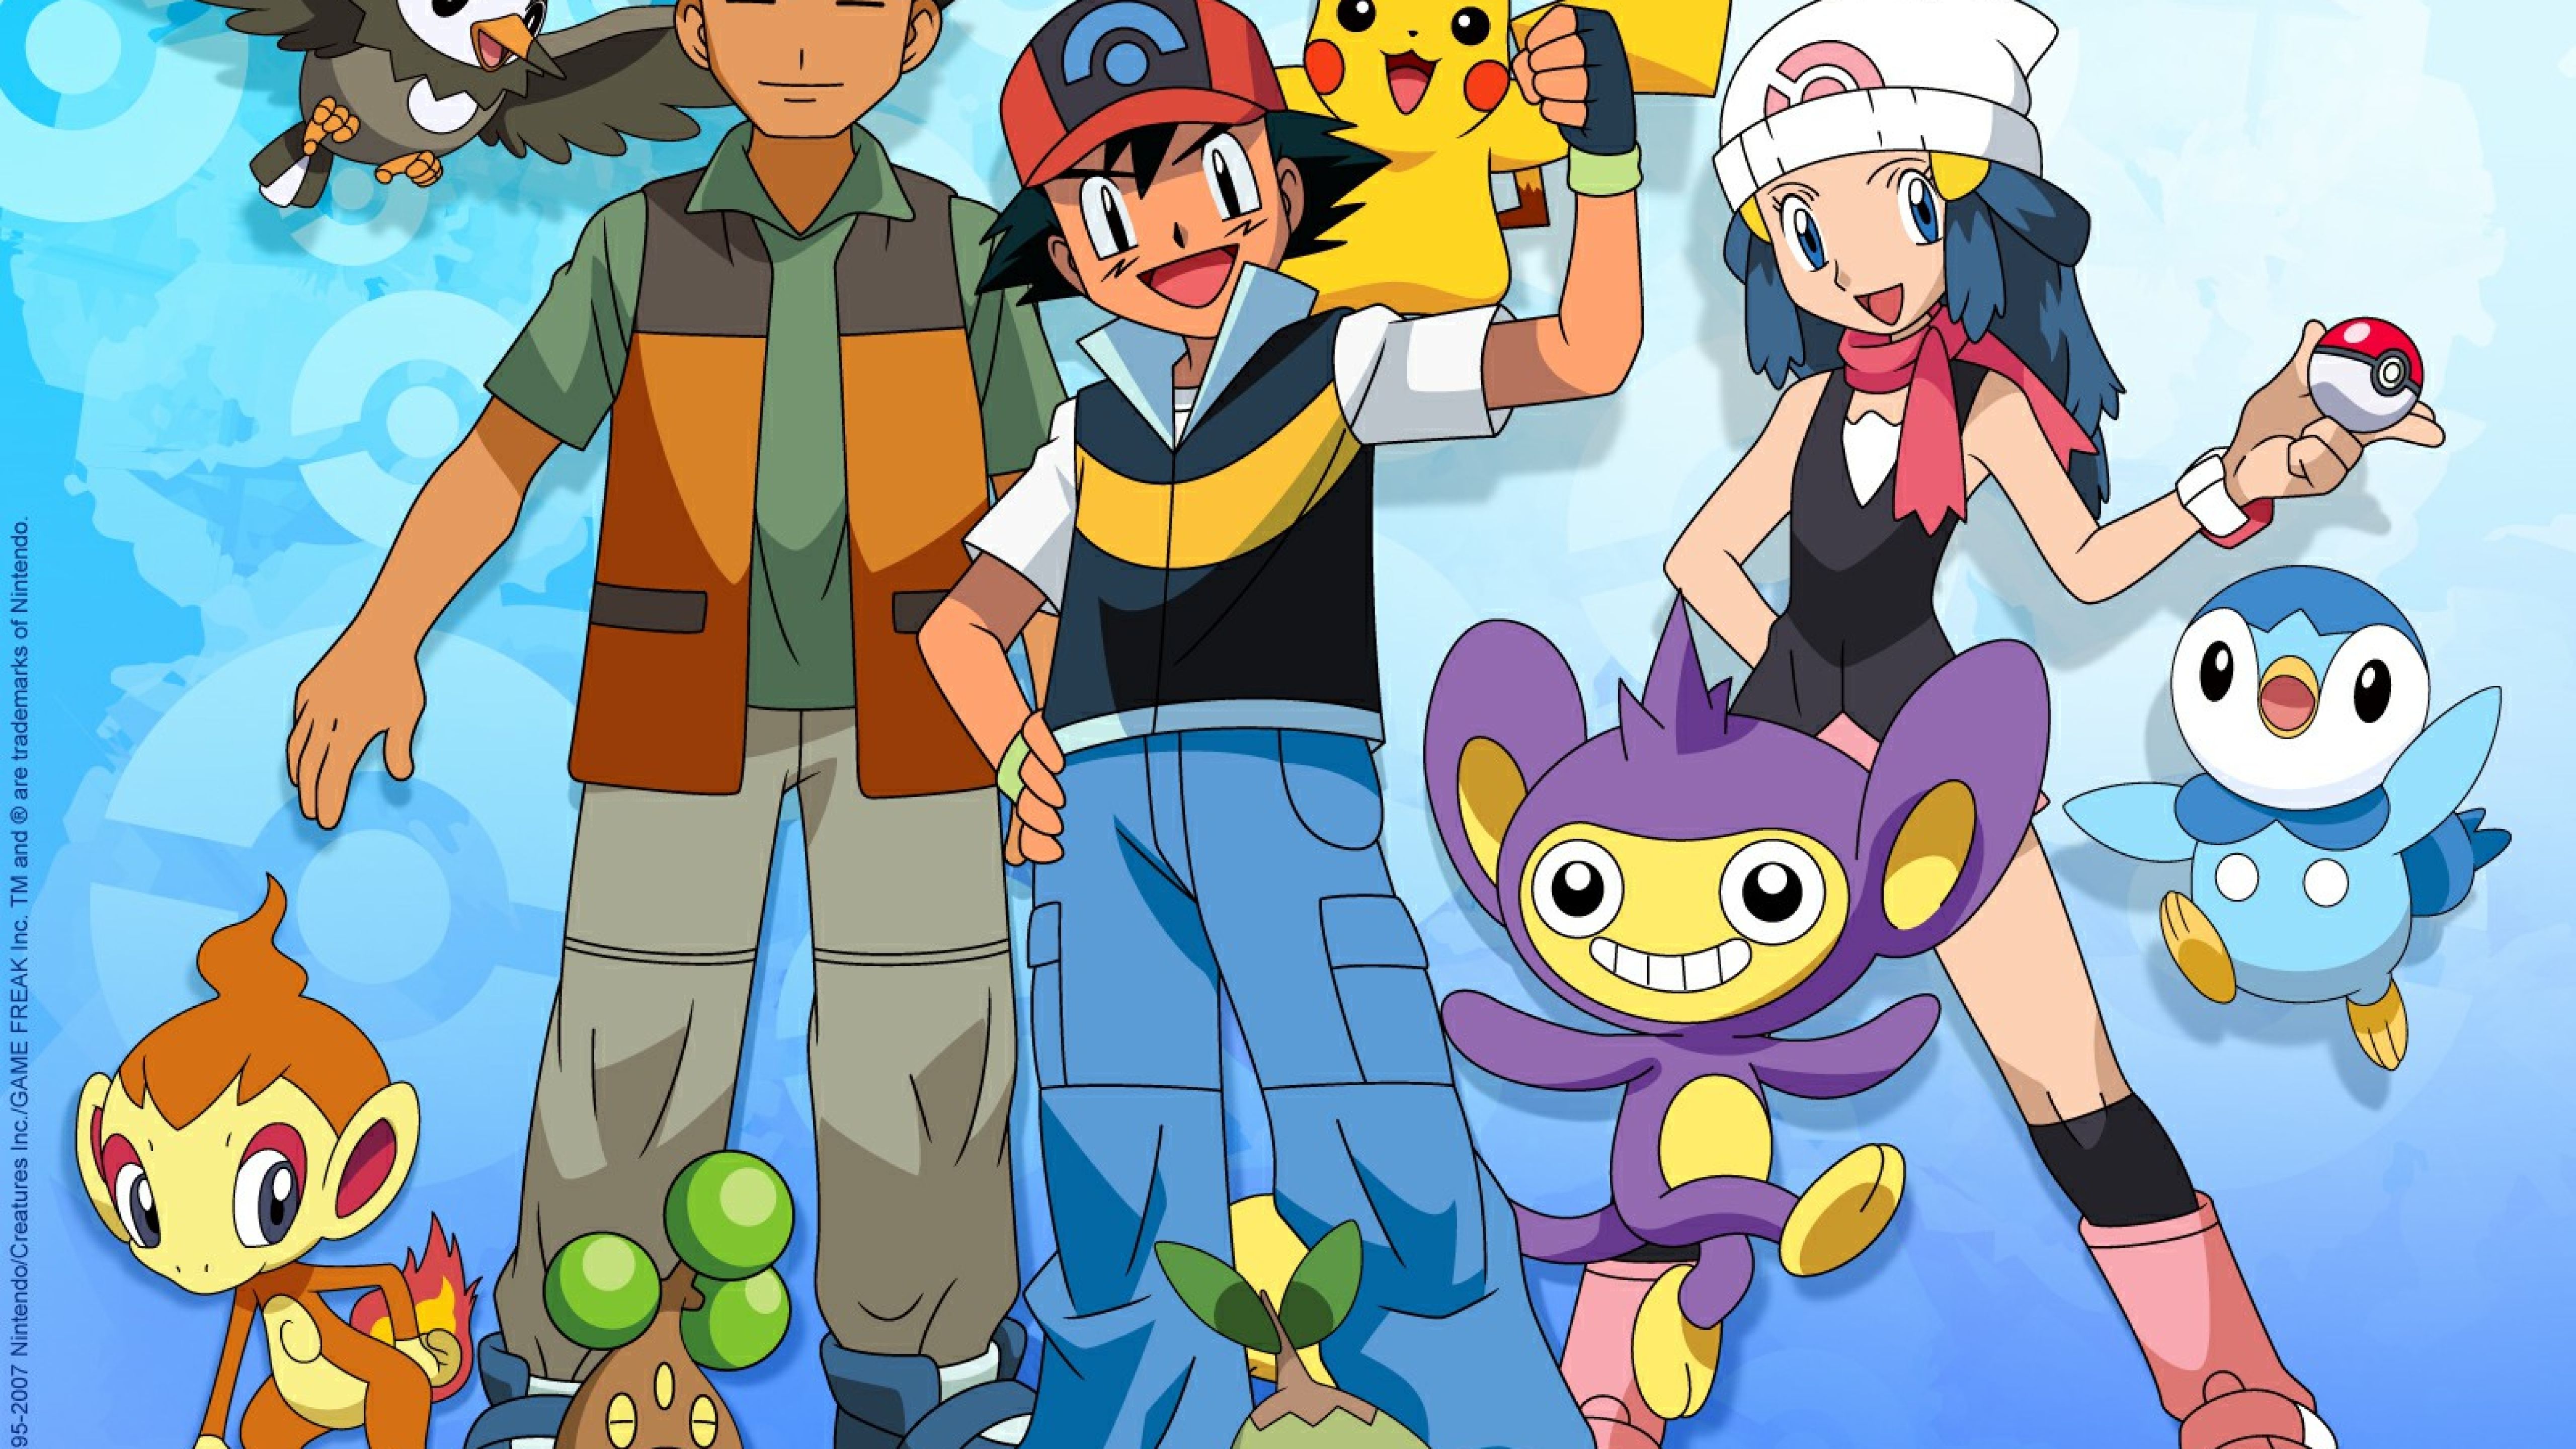 Pokemon 3D Anime Full HD Wallpaper Picture Downloads A259